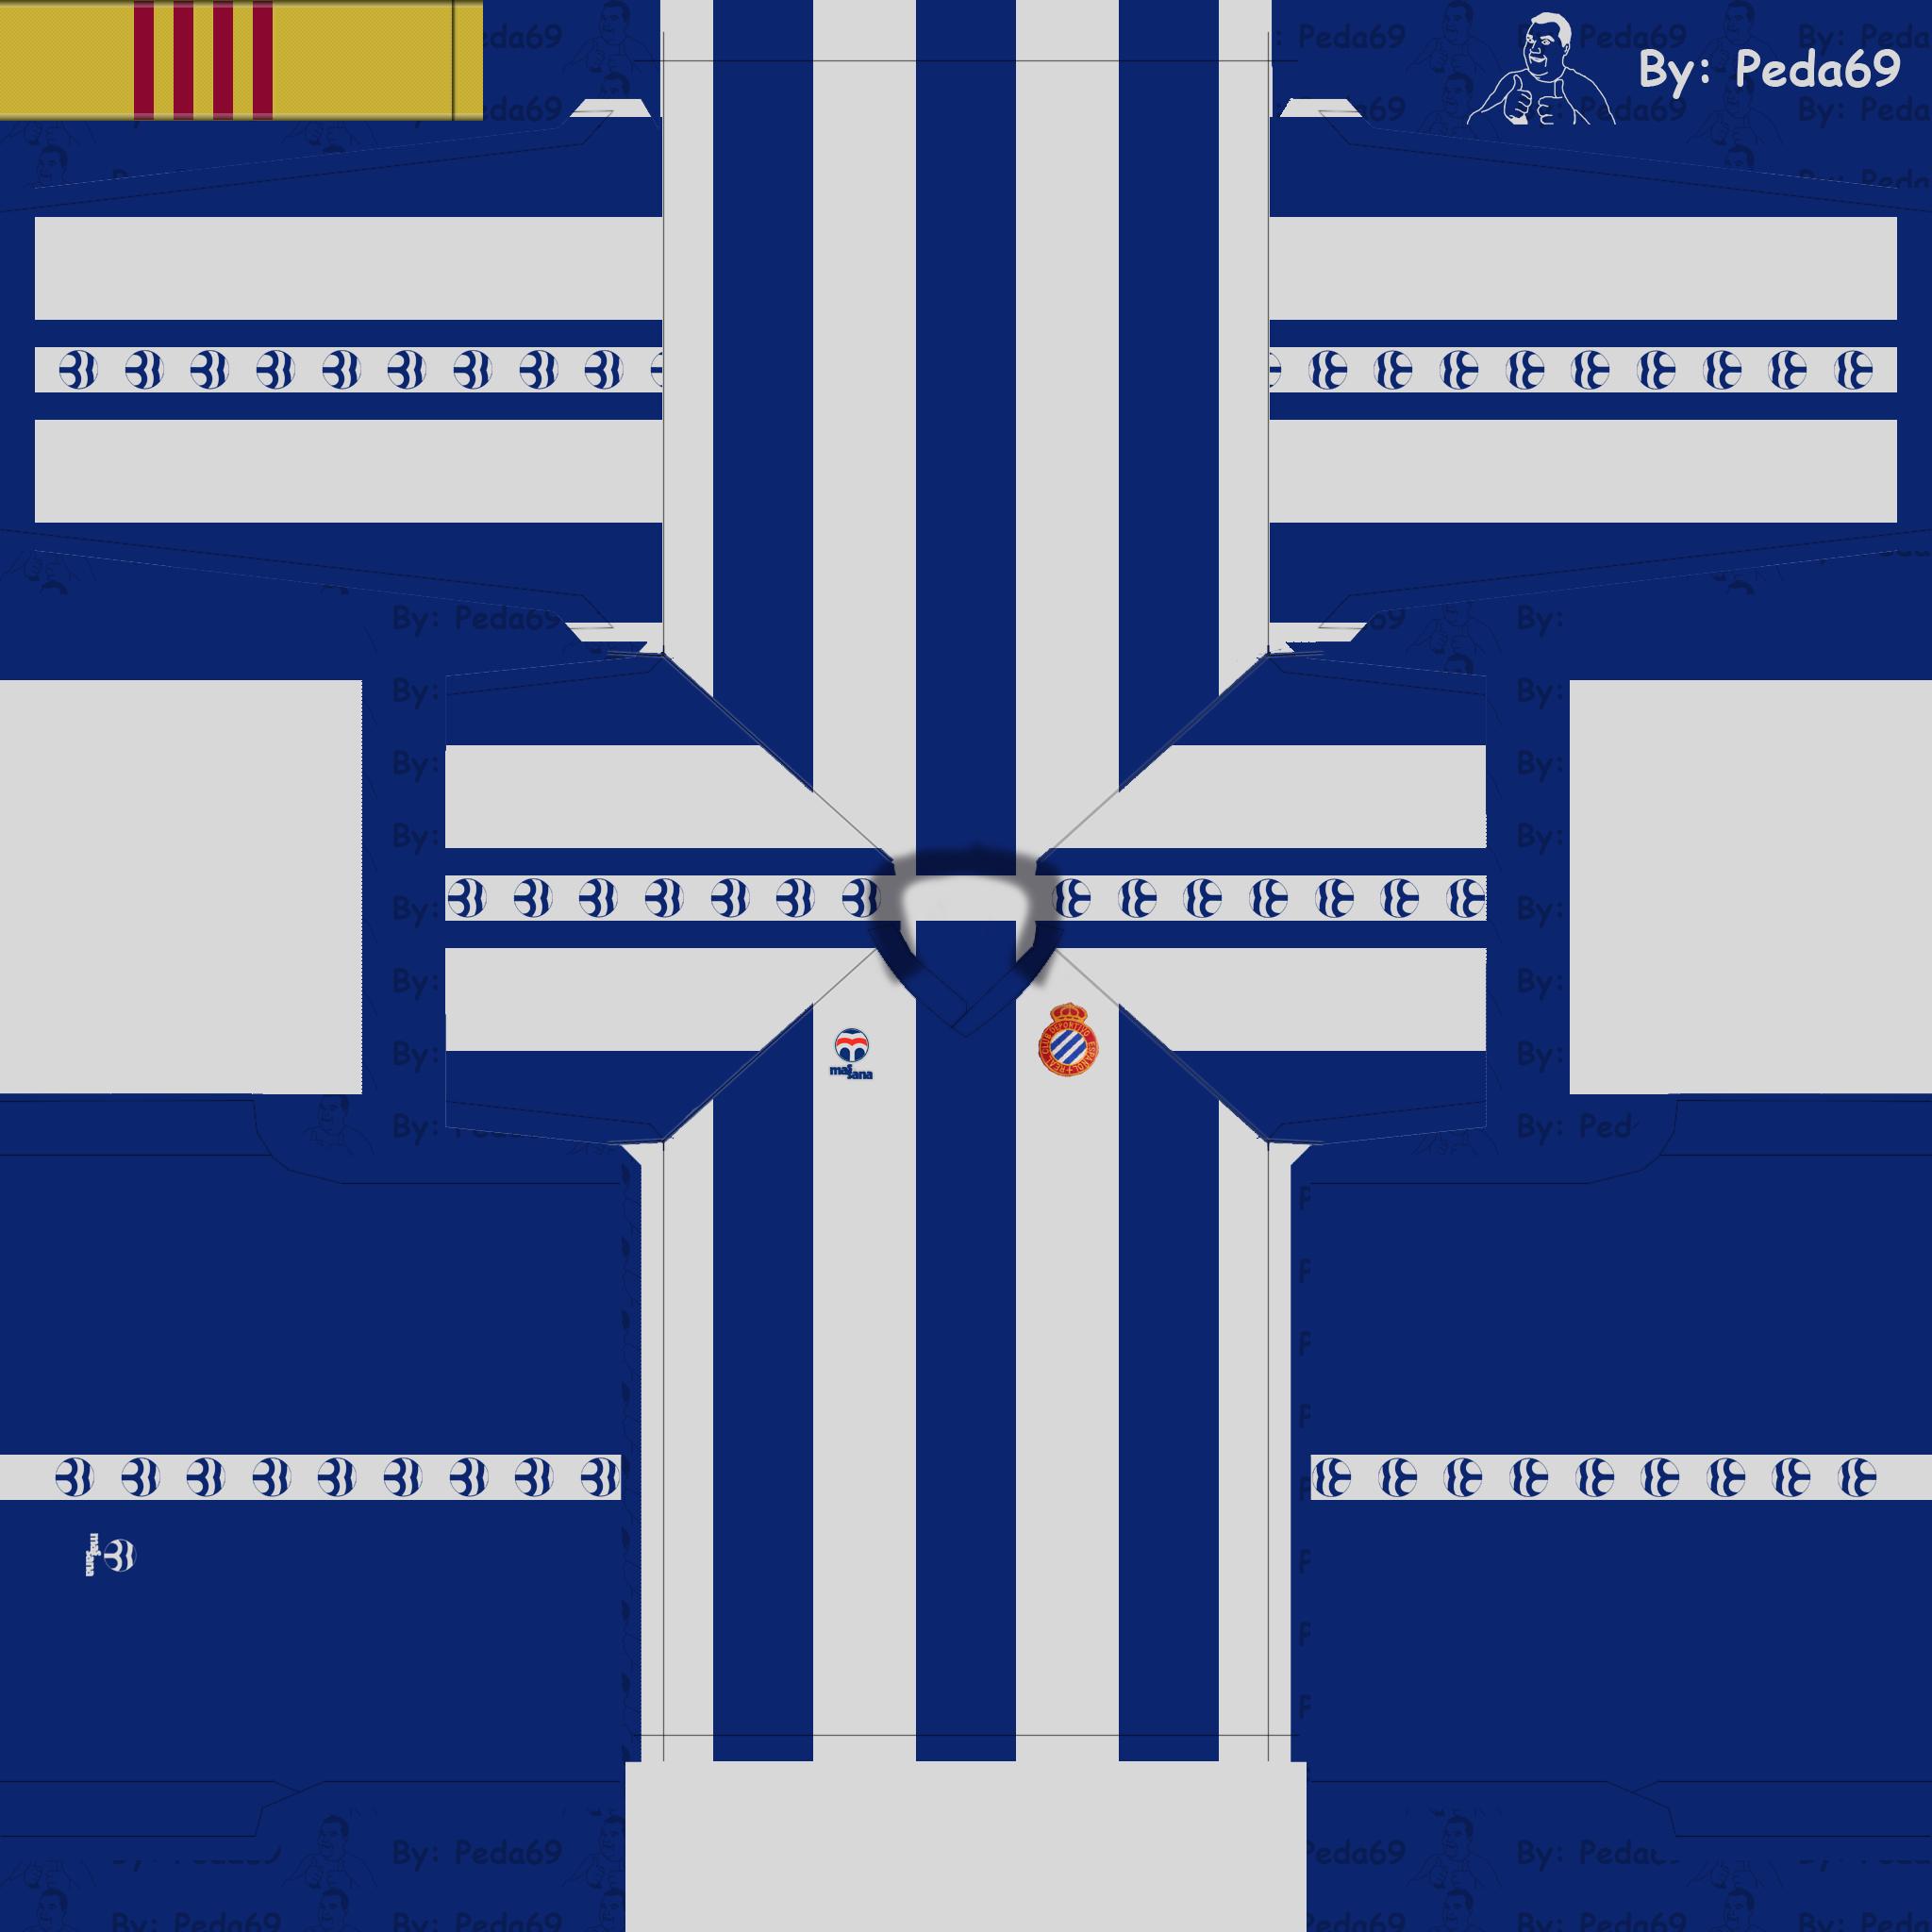 Peda69™ Classic on Twitter: "RCD Espanyol local / visitante subidas Drive. #PES2018 #PES2019 https://t.co/jnp4ihAgwI" / Twitter